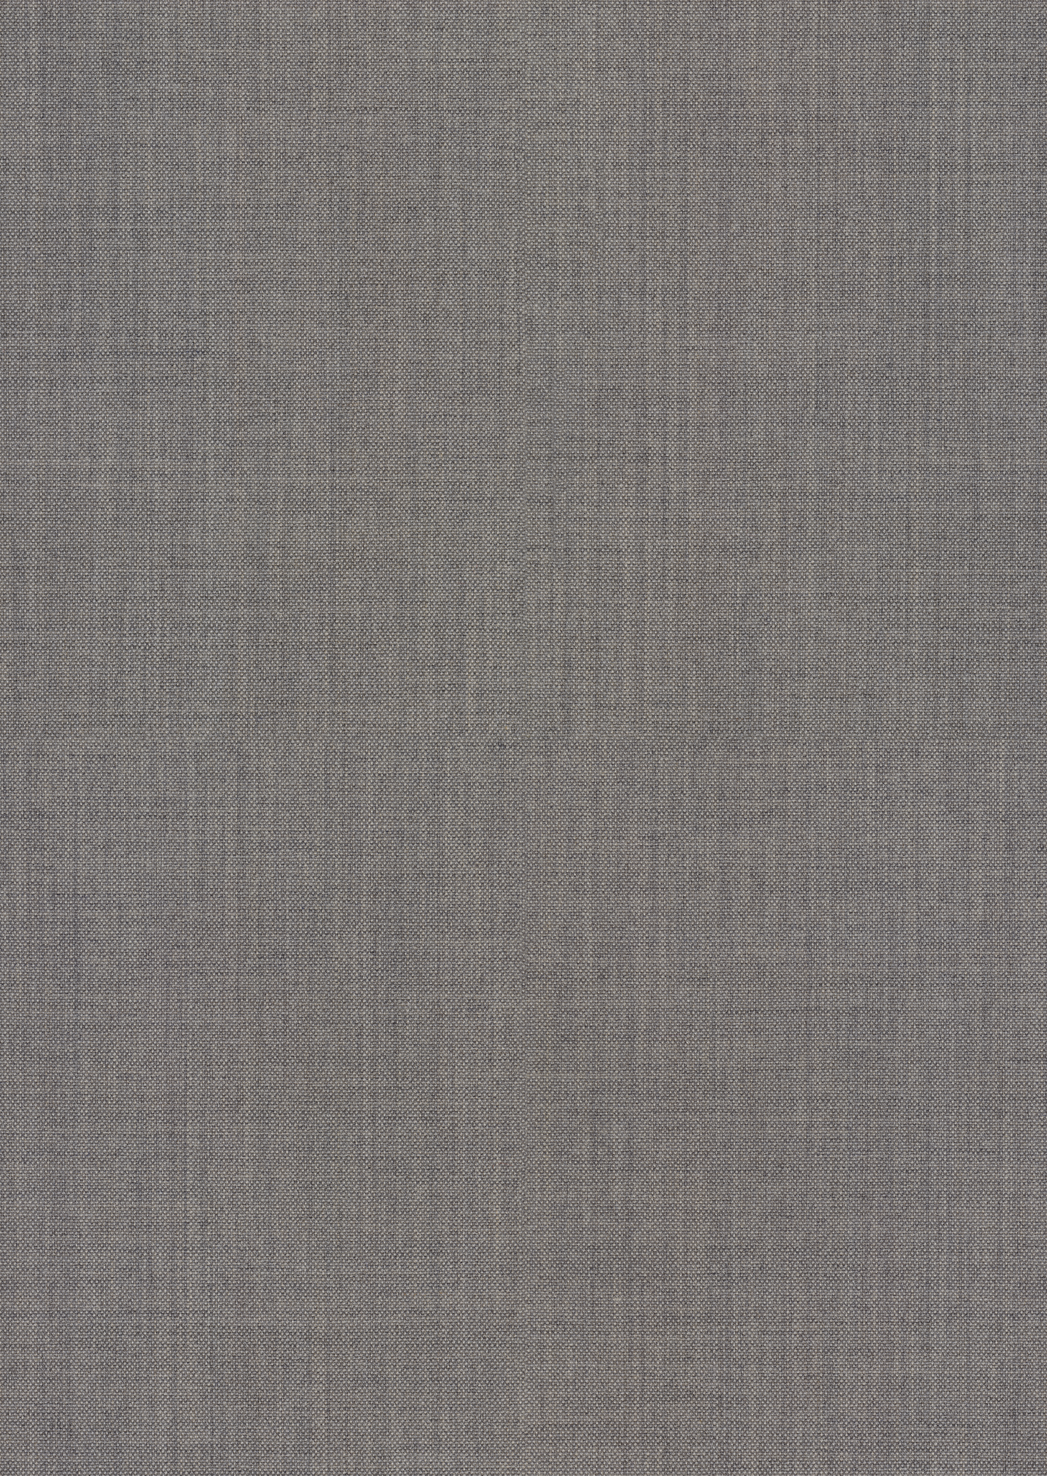 Fabric sample Remix 3 123 grey